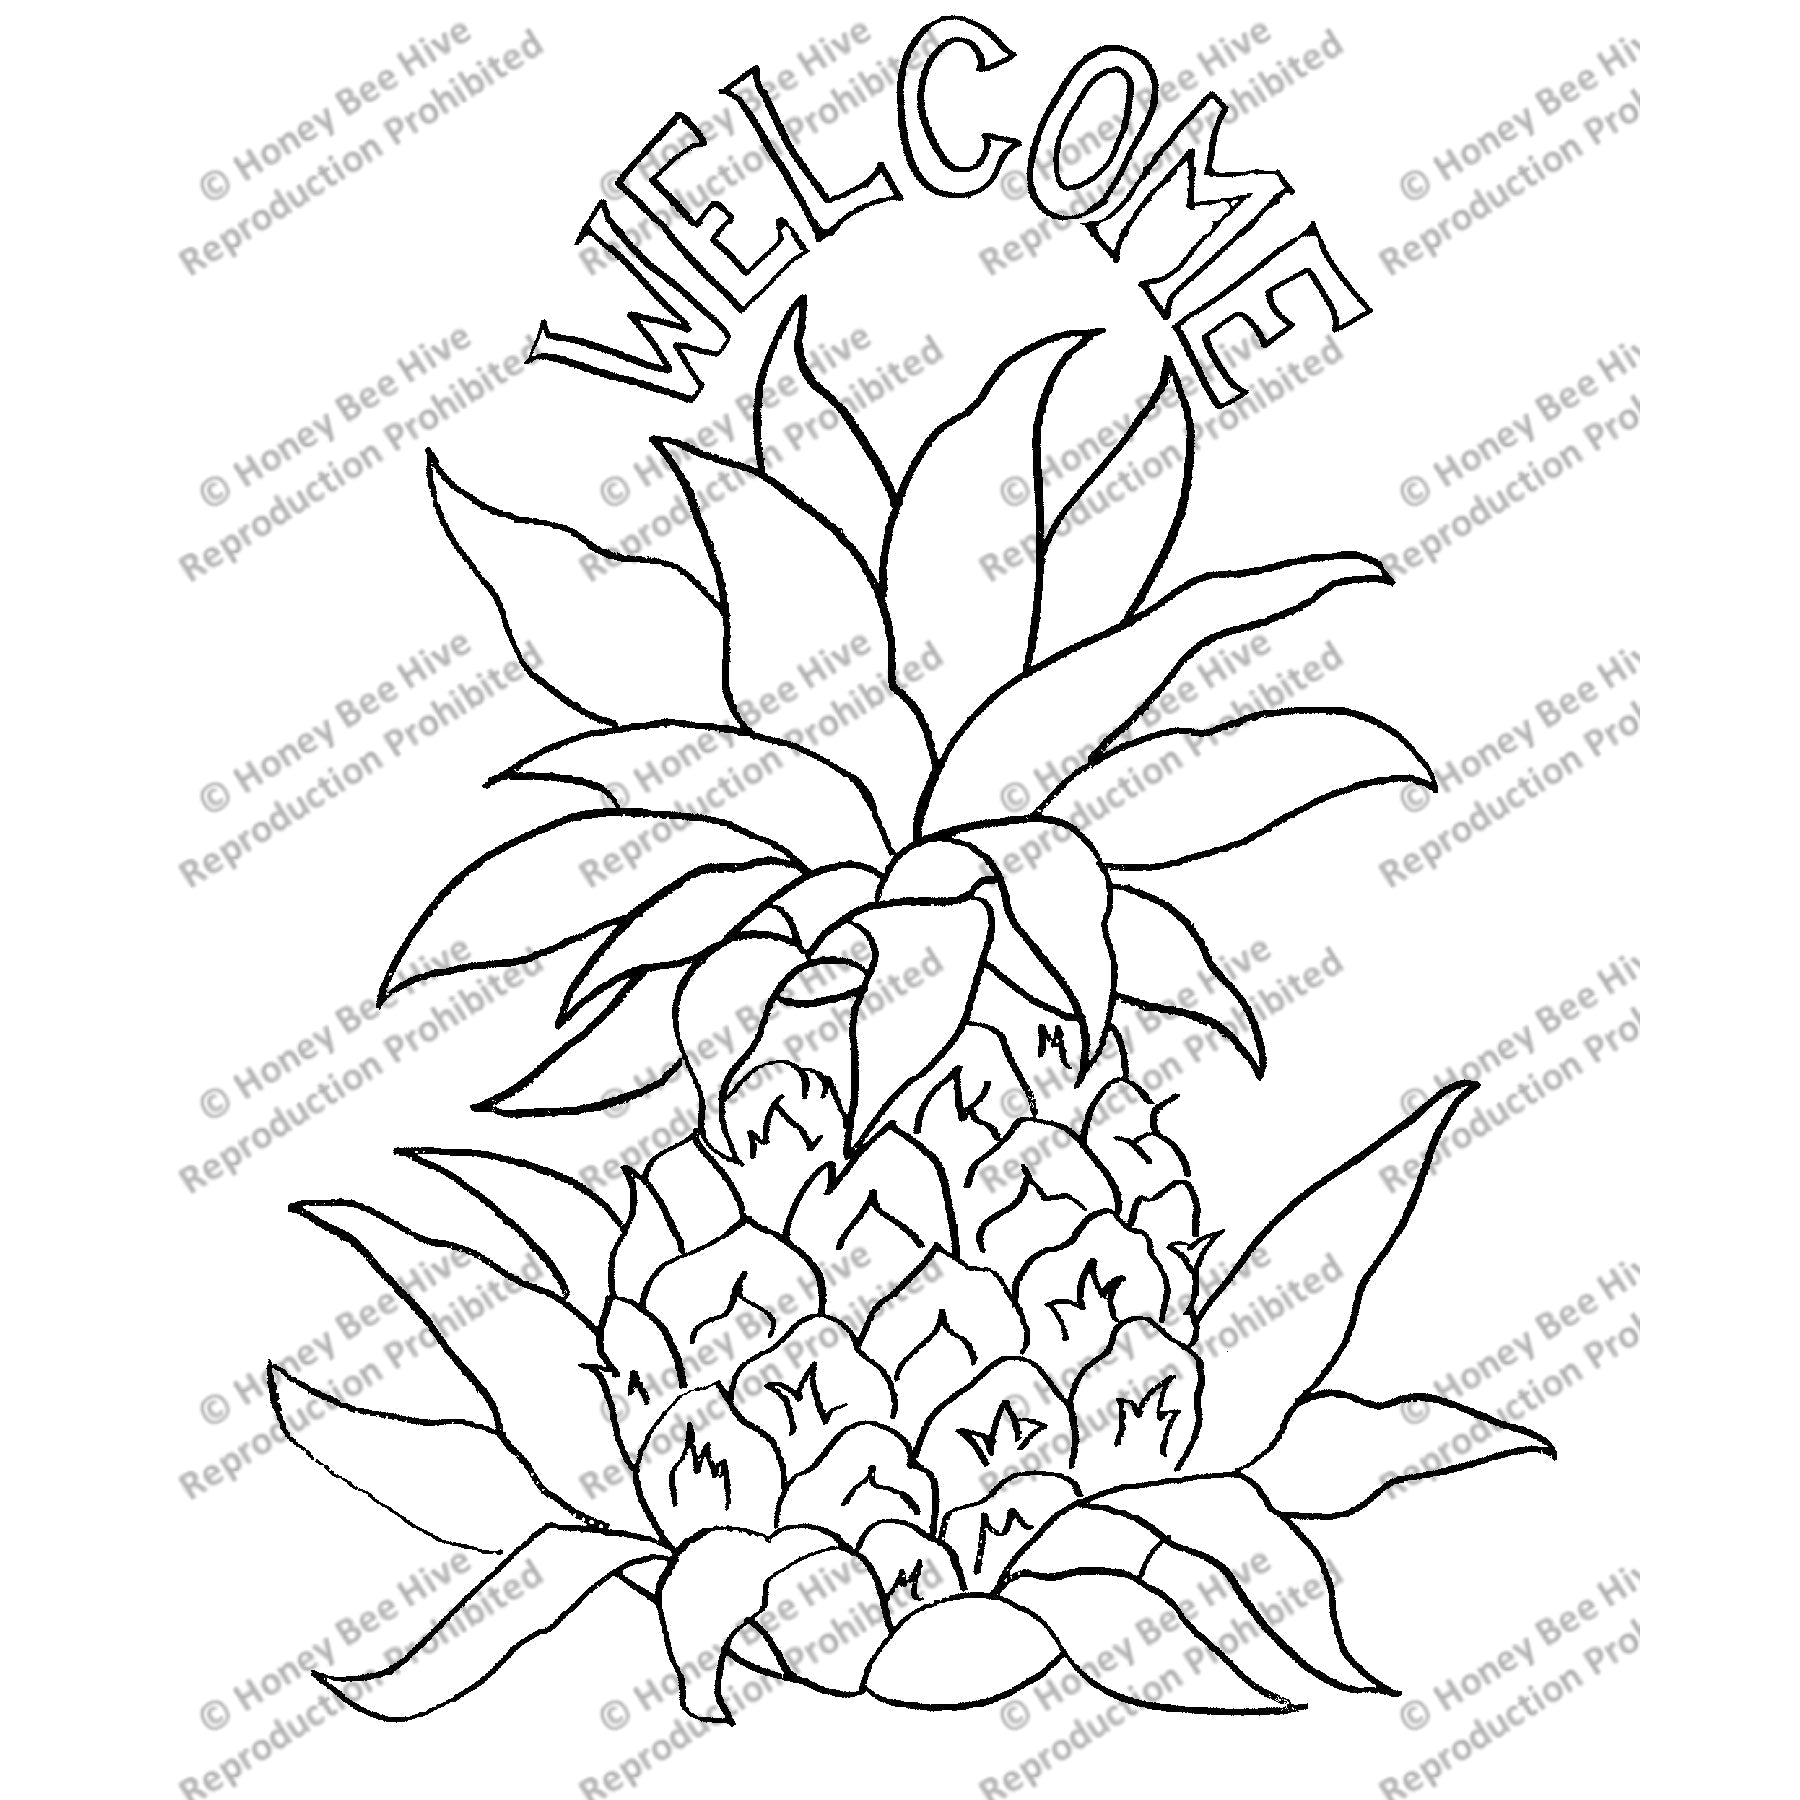 Hospitality Pineapple, rug hooking pattern